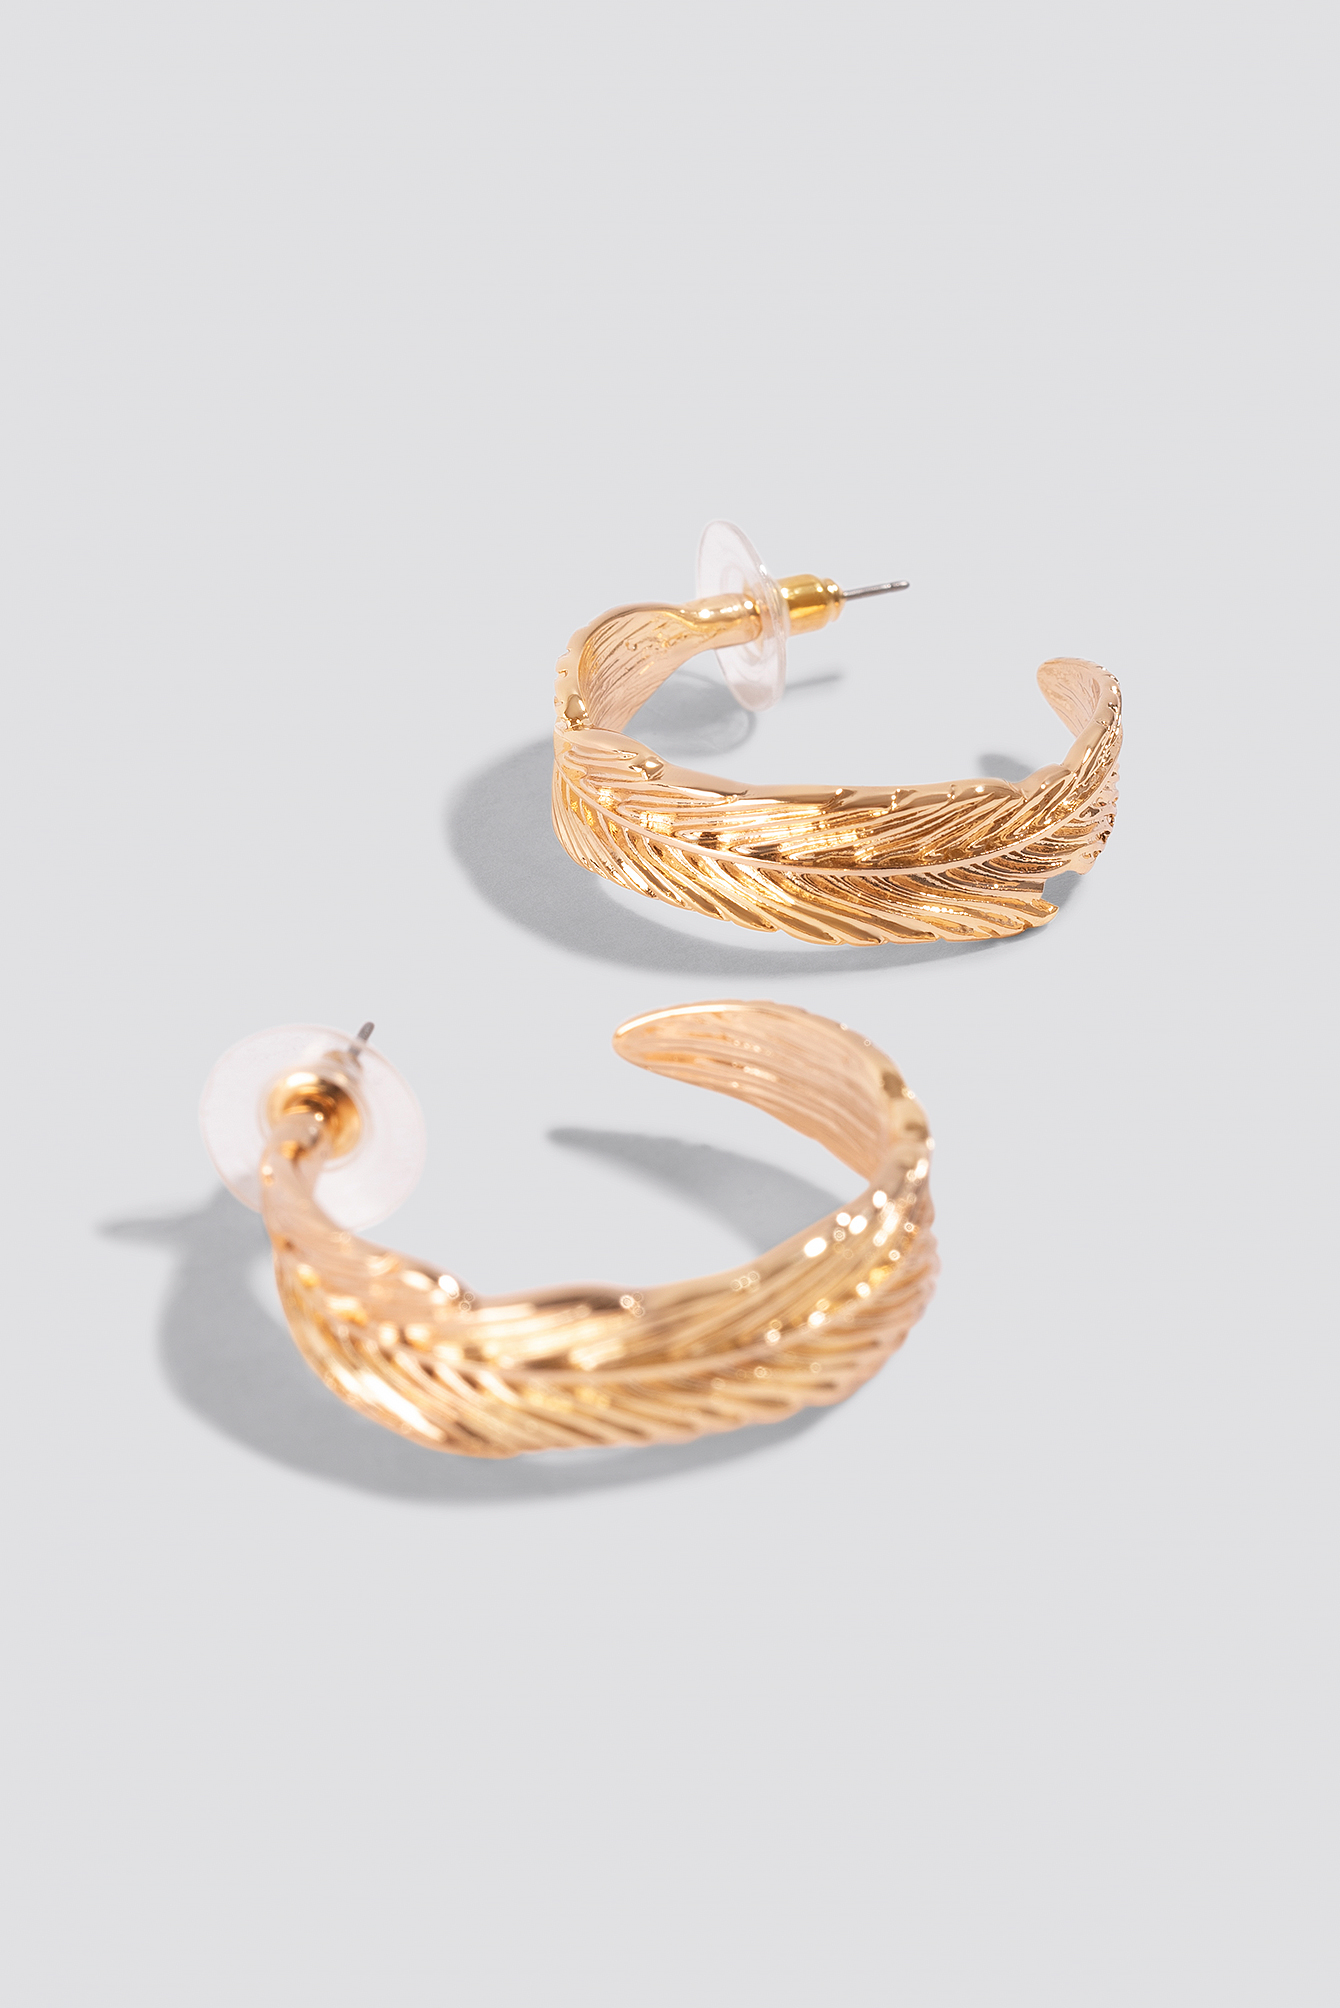 Gold Feather Hoop Earrings